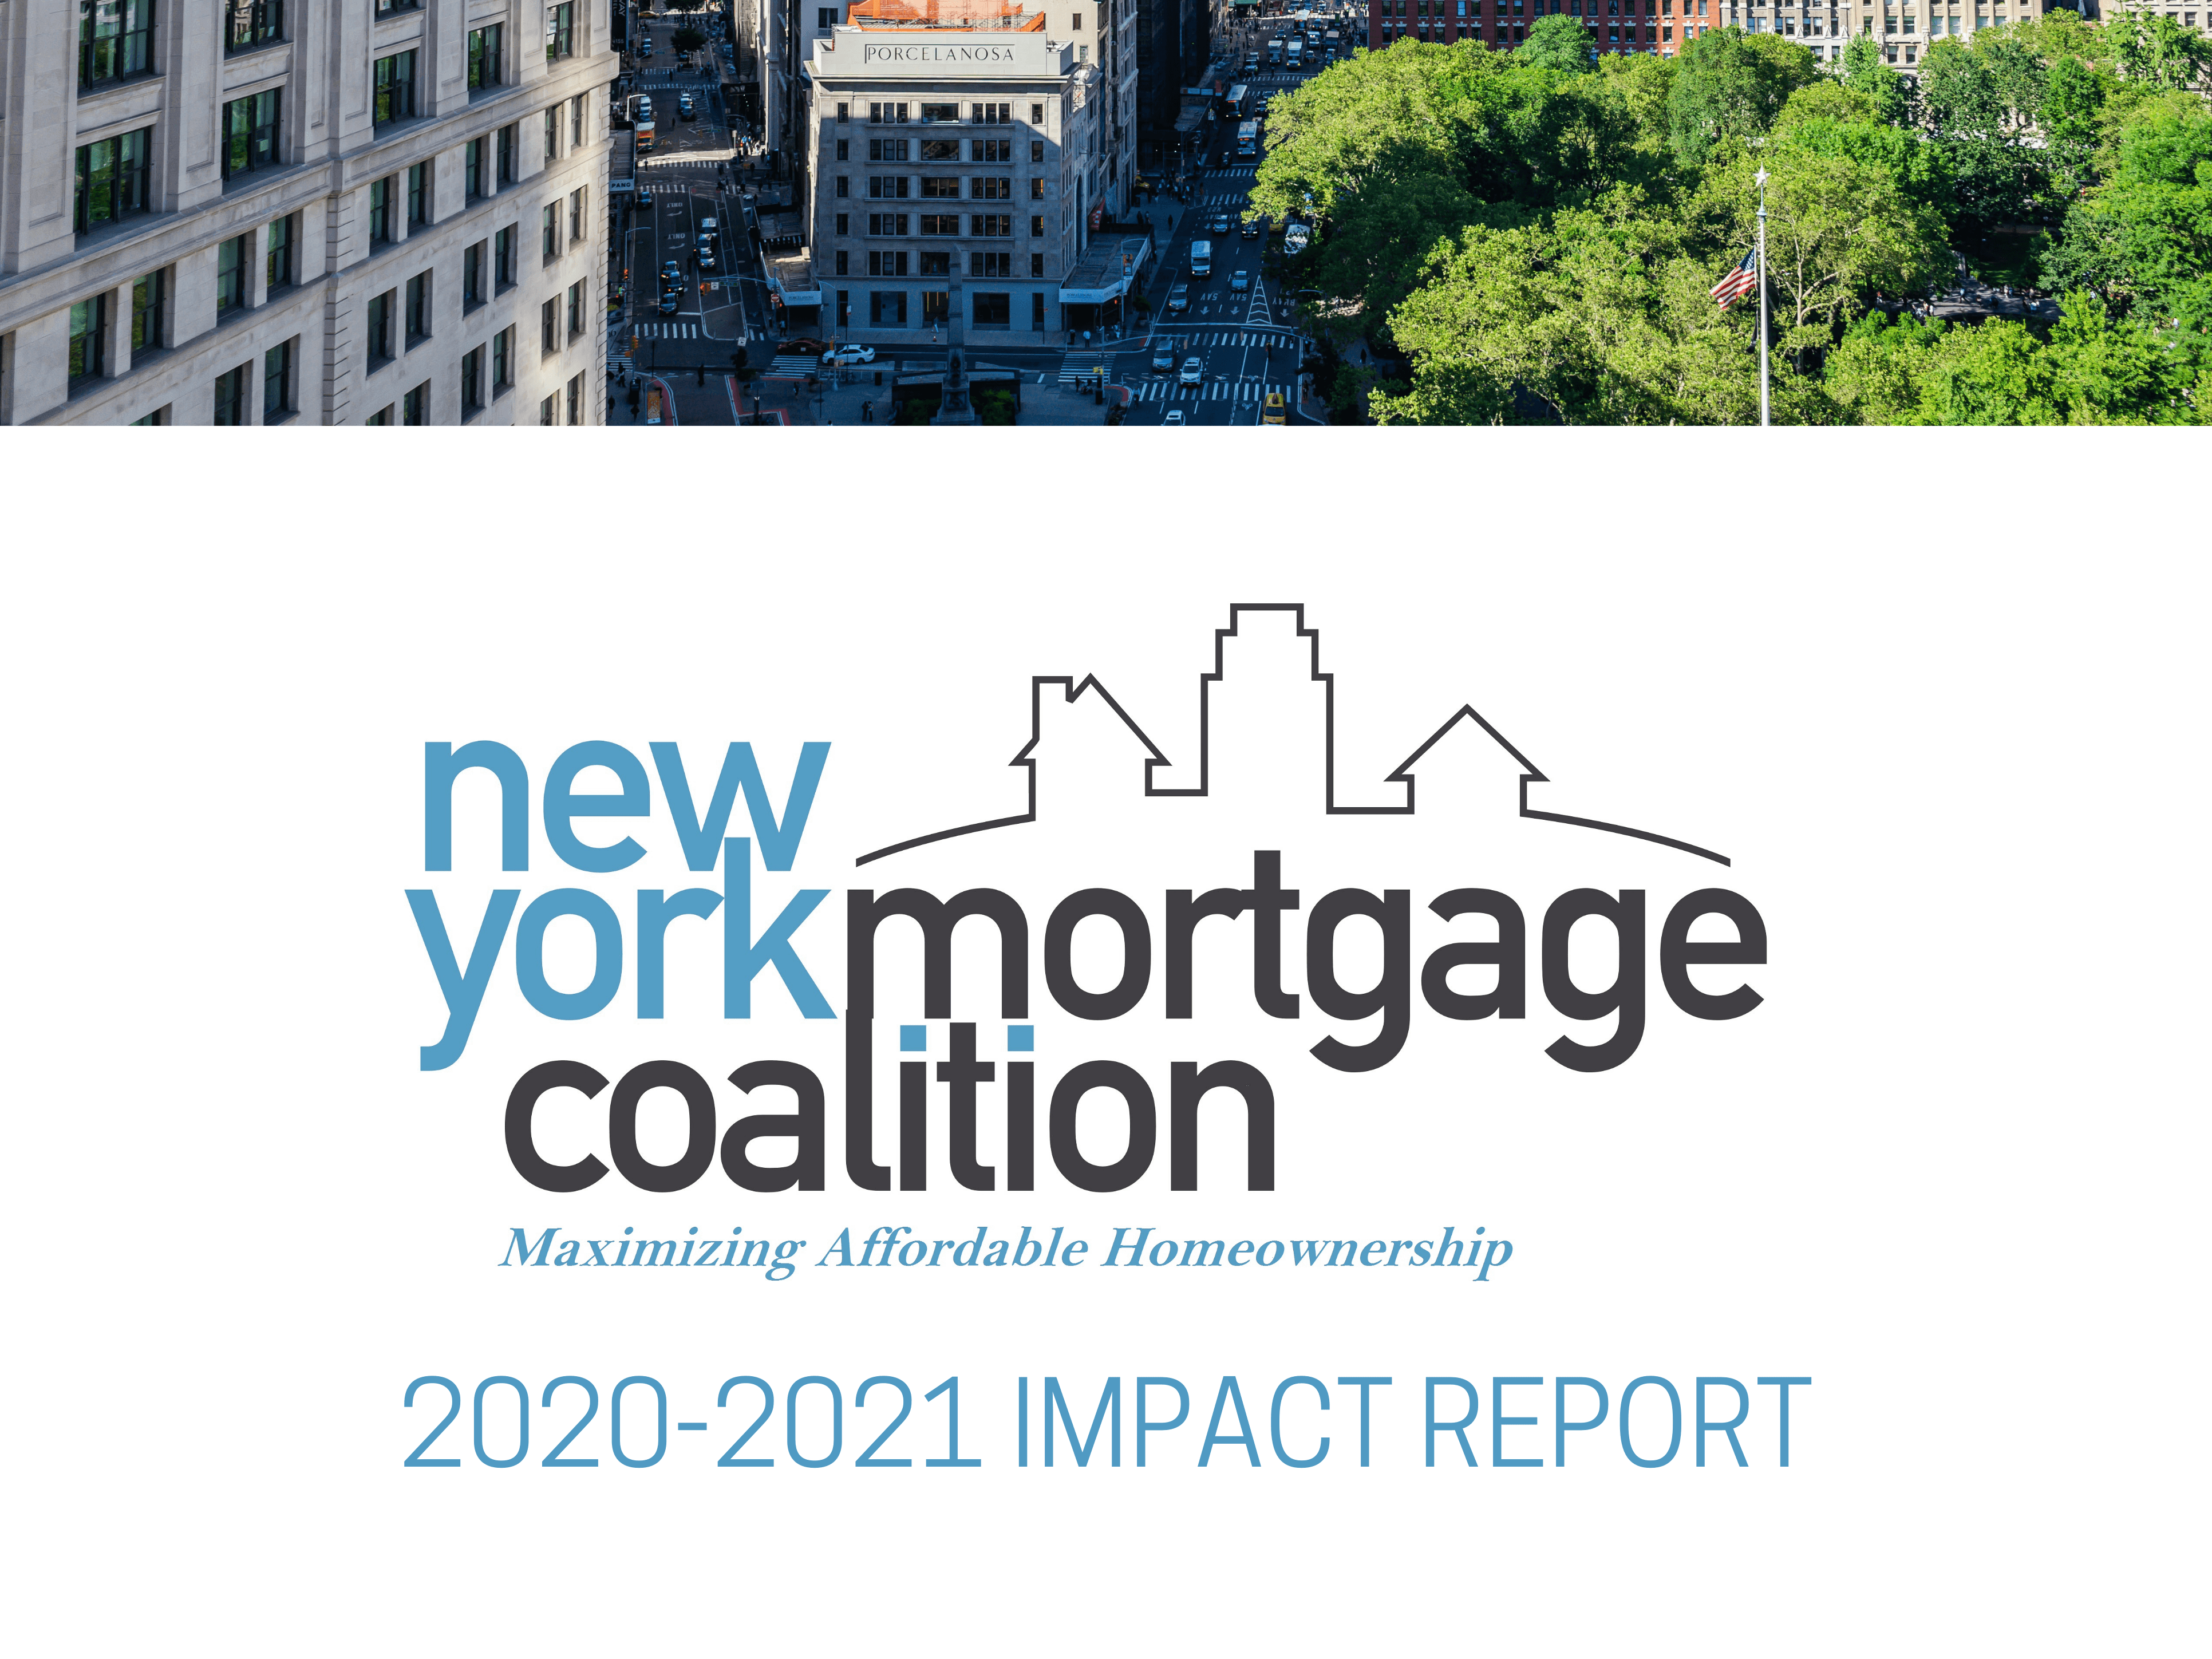 2020 - 2021 Impact Report